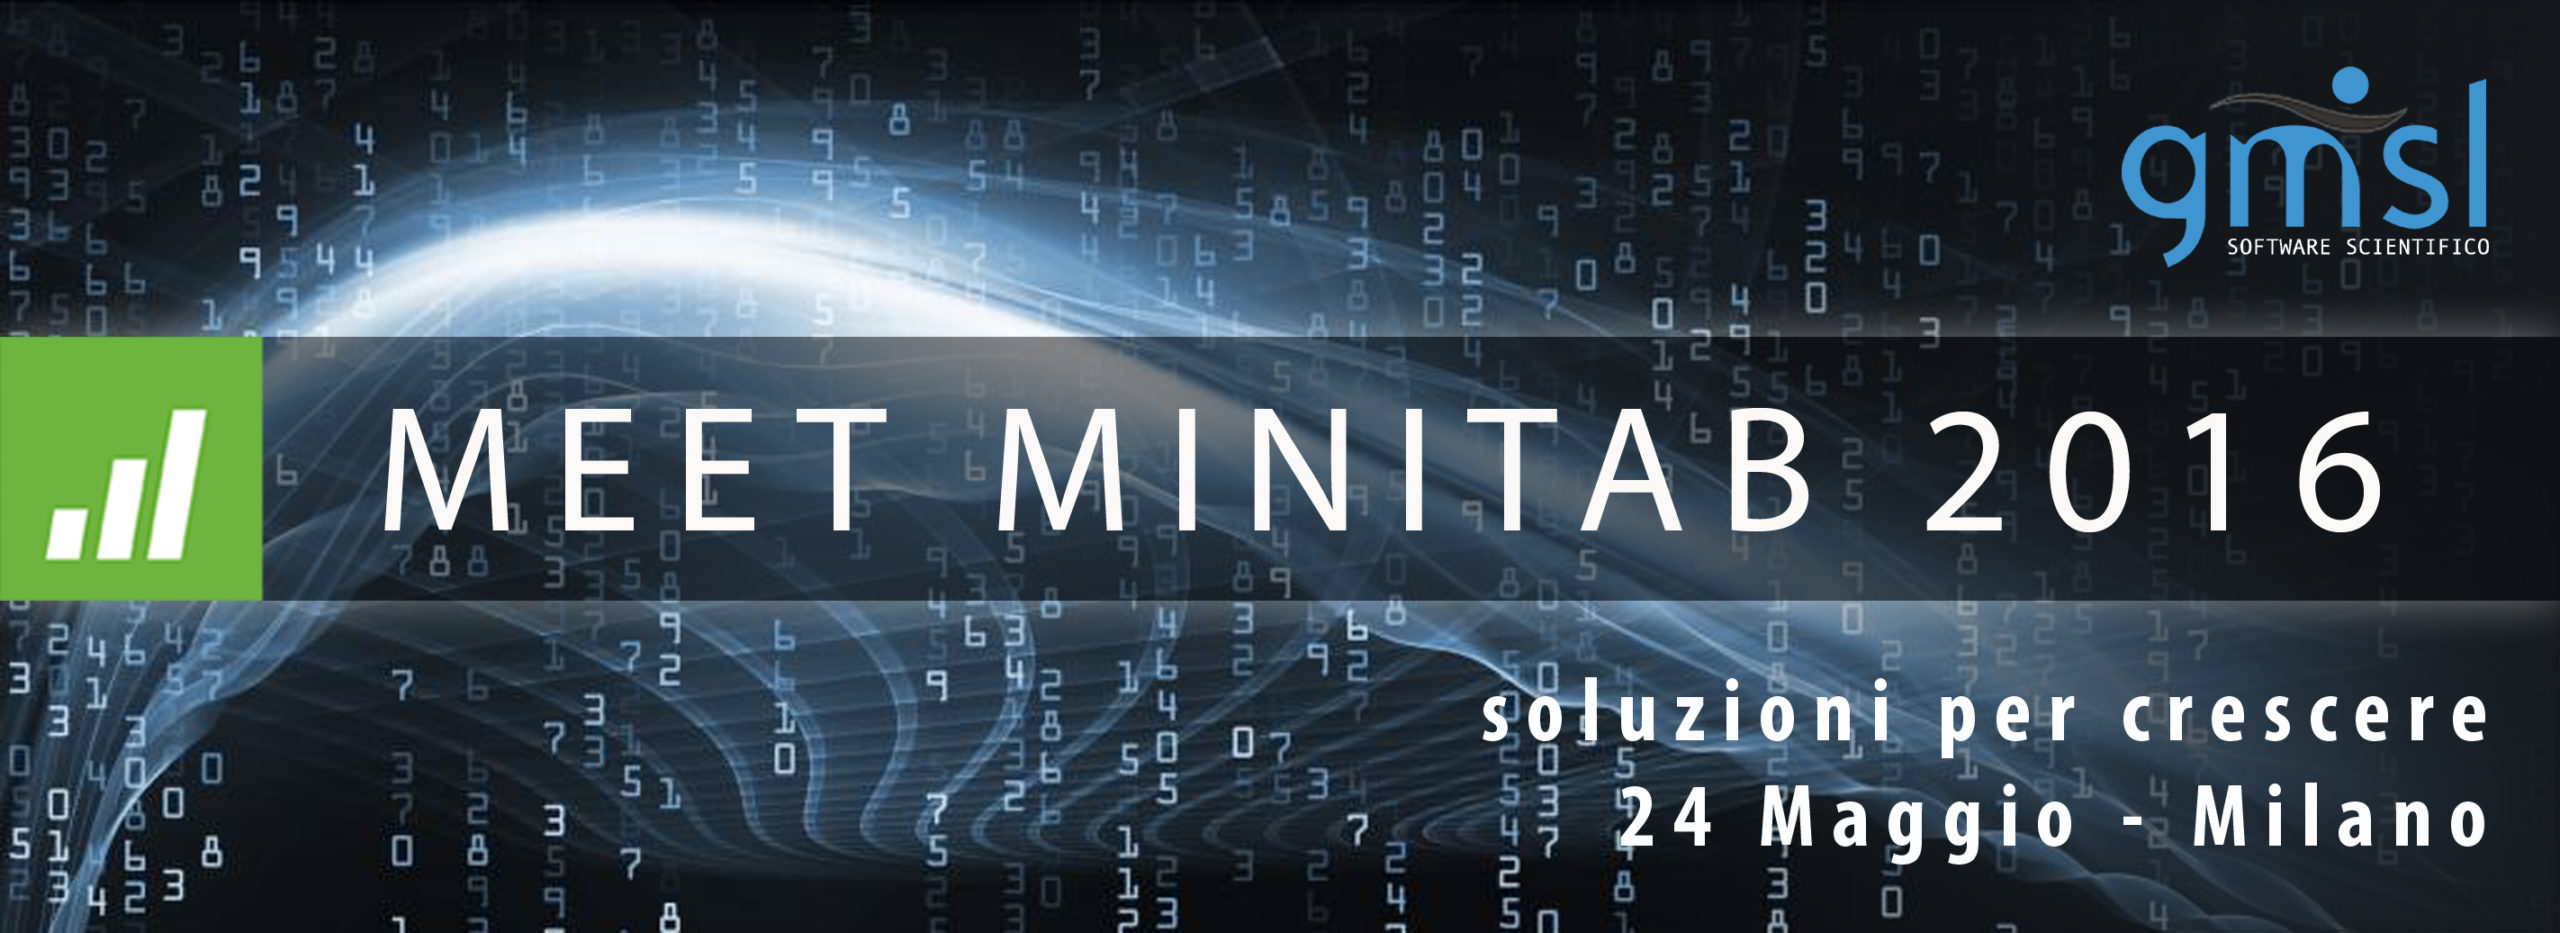 meet_minitab_2016-copia-scaled Meet Minitab. Milano, 24 Maggio 